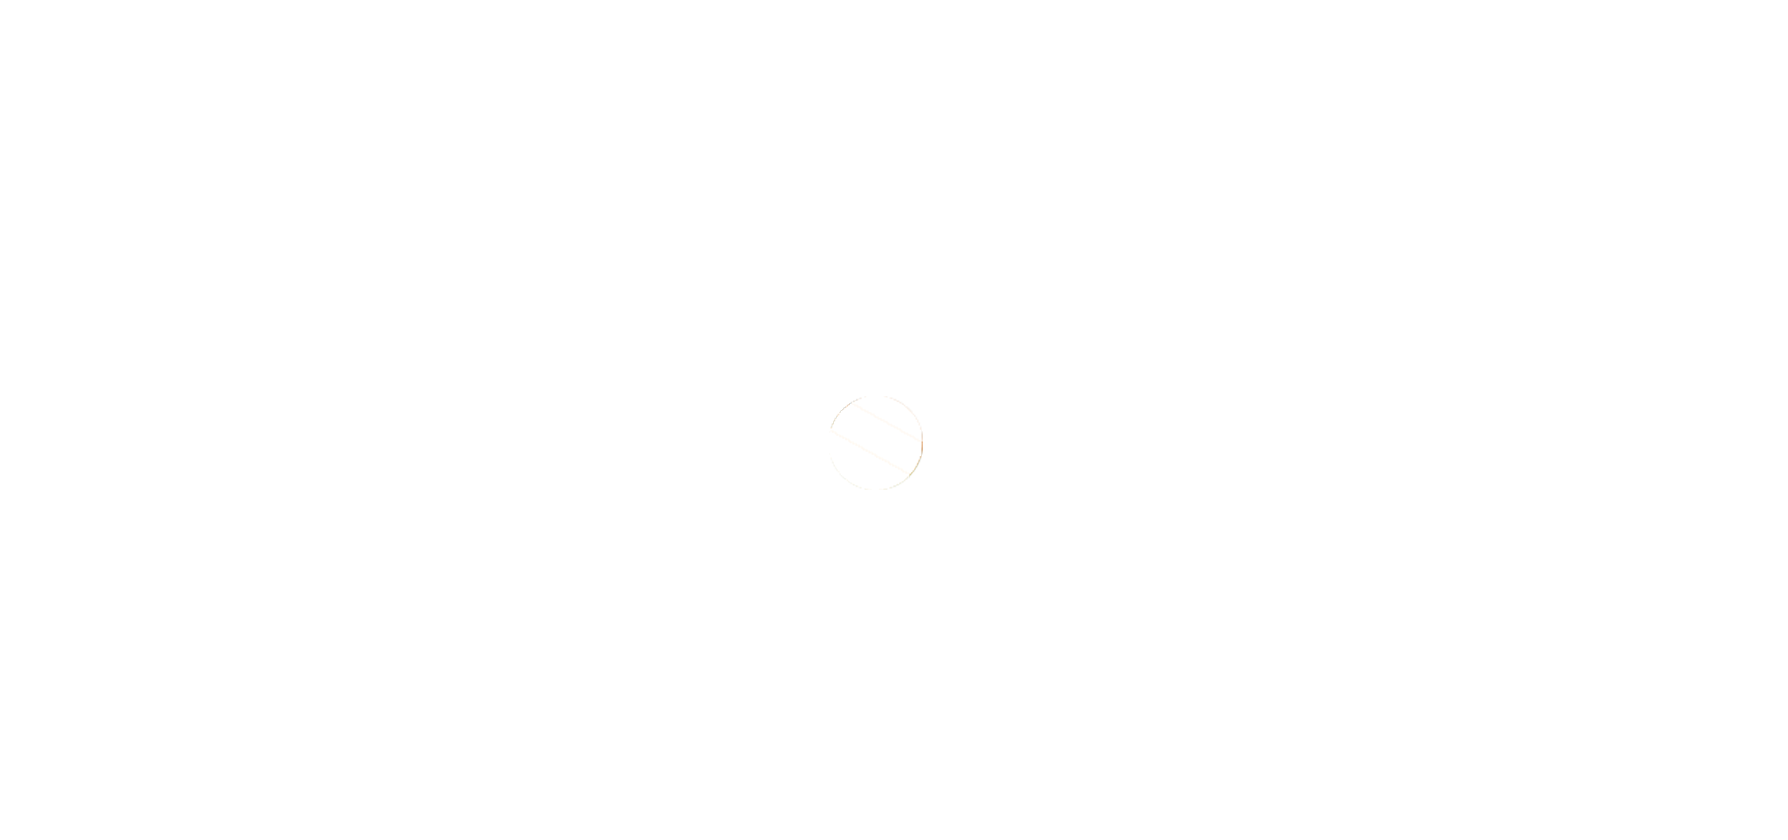 together rising logo